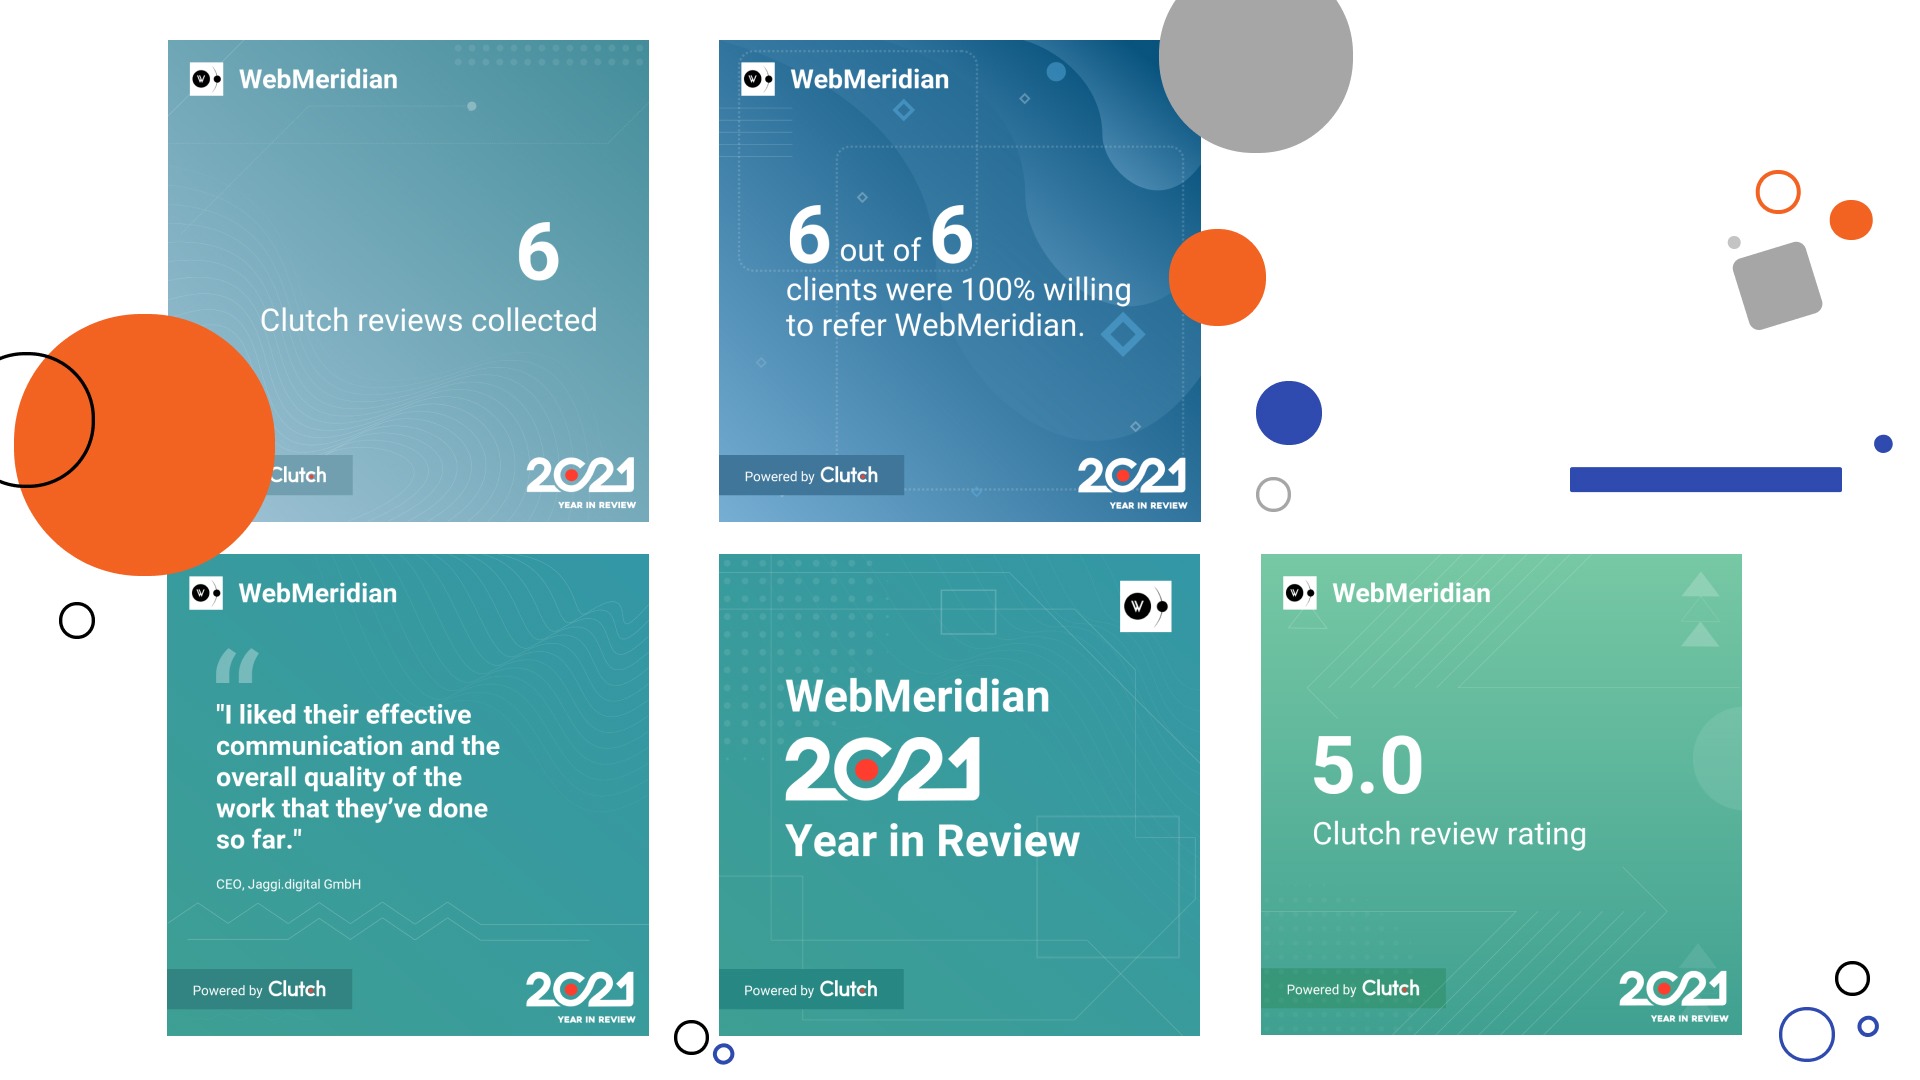 WebMeridian’s Clutch Year in Review